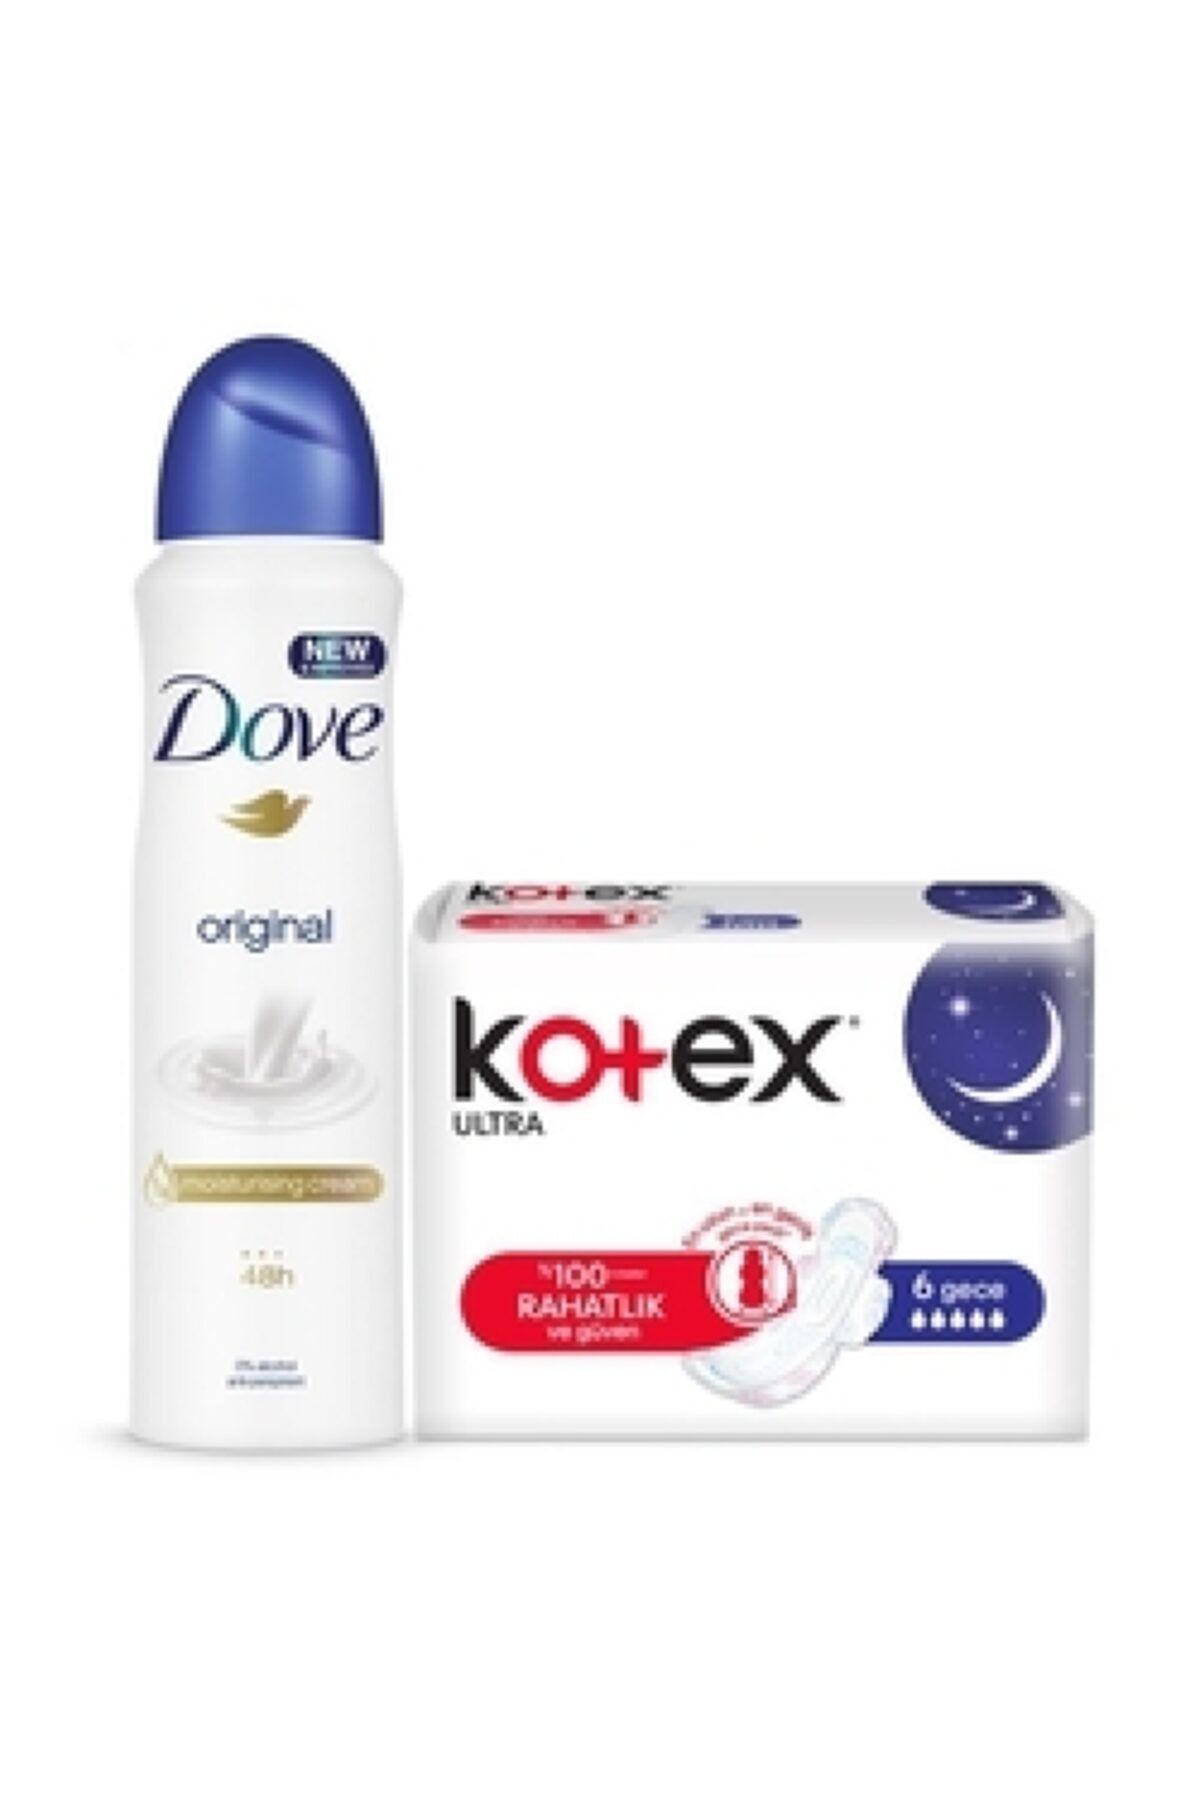 Dove Orginal Deo + Kotex Ultra Gece 6lı